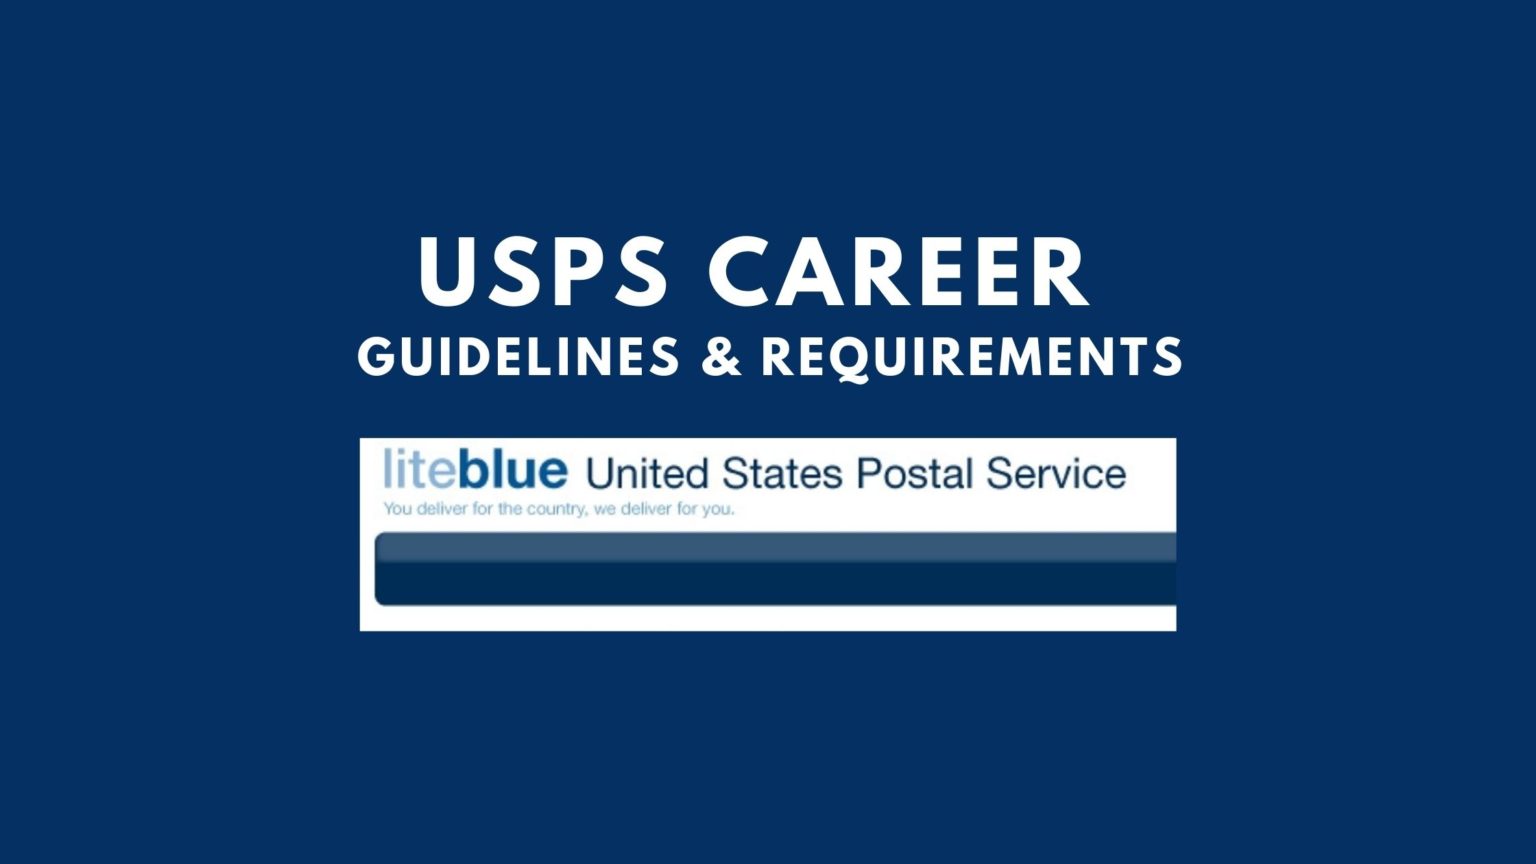 USPS Career Guidelines & Requirements LITEBLUE